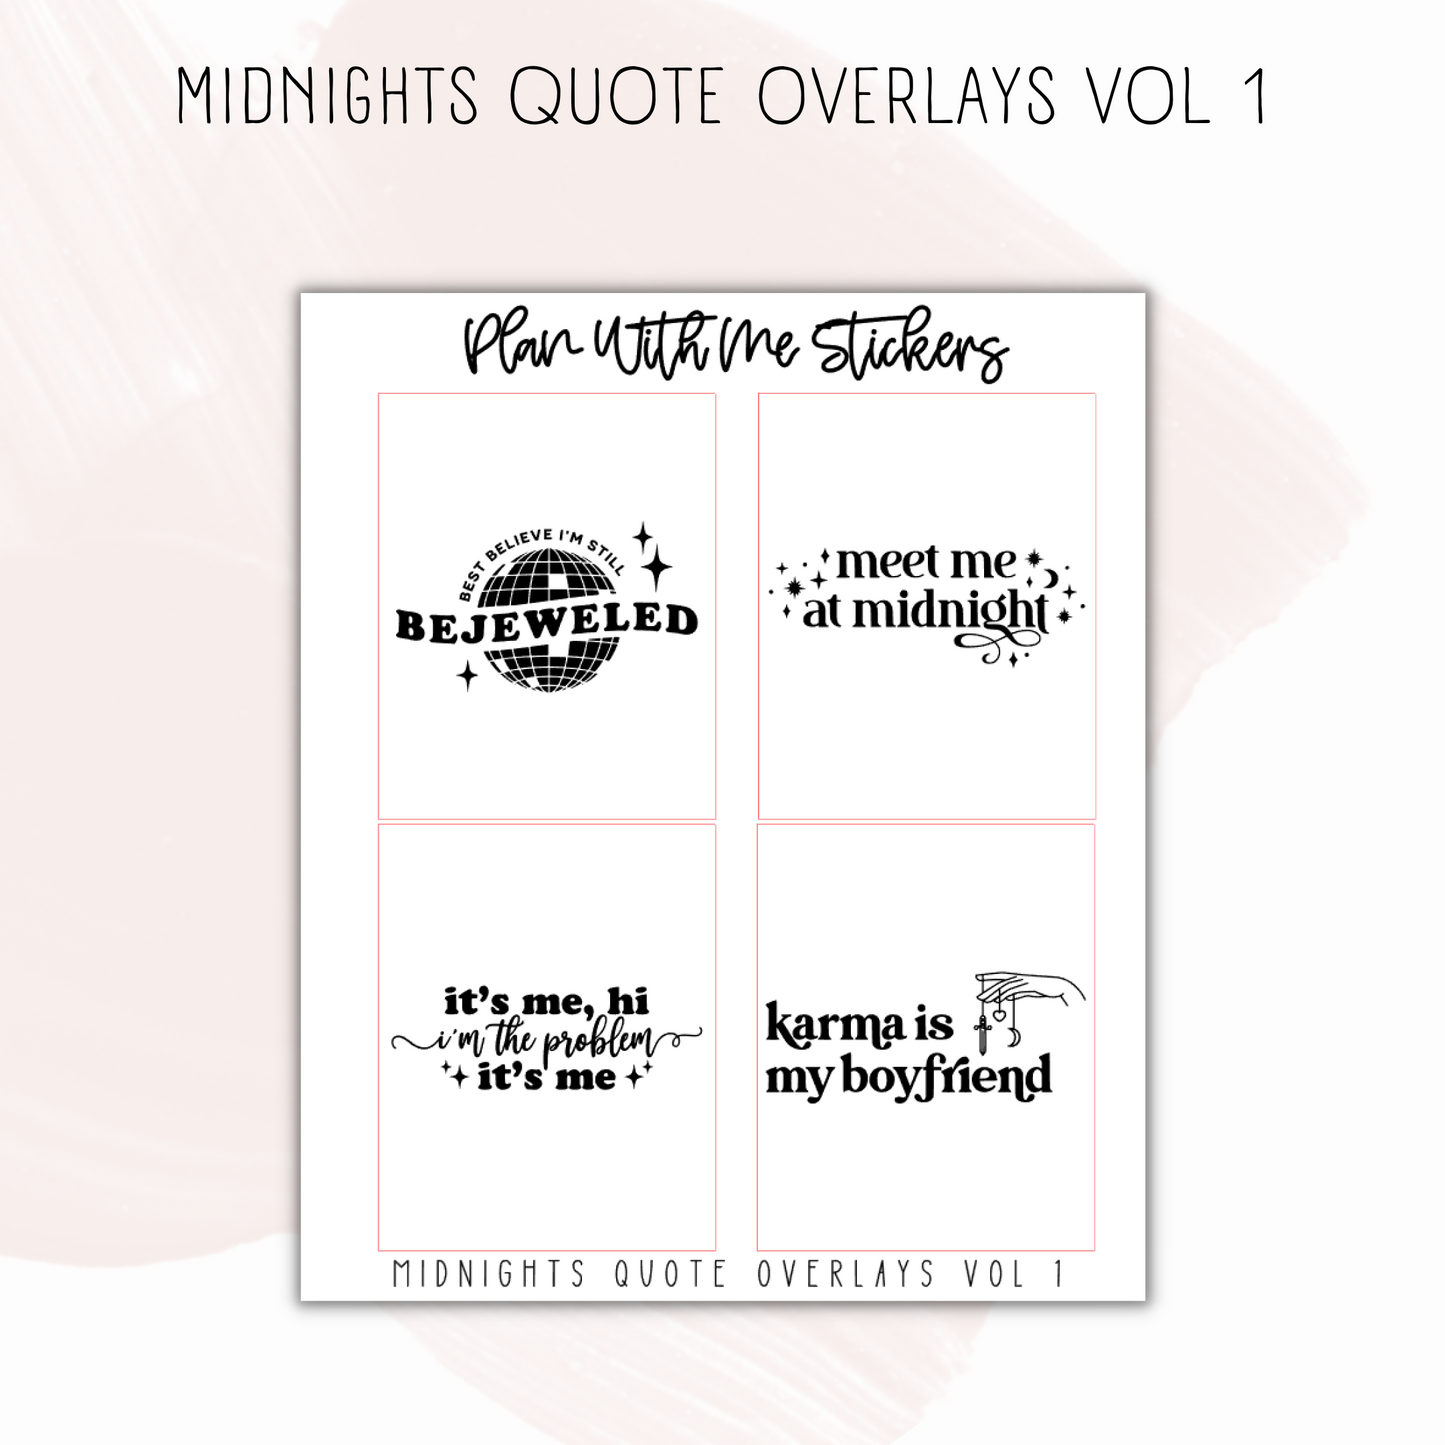 Midnights Quote Overlays Vol 1